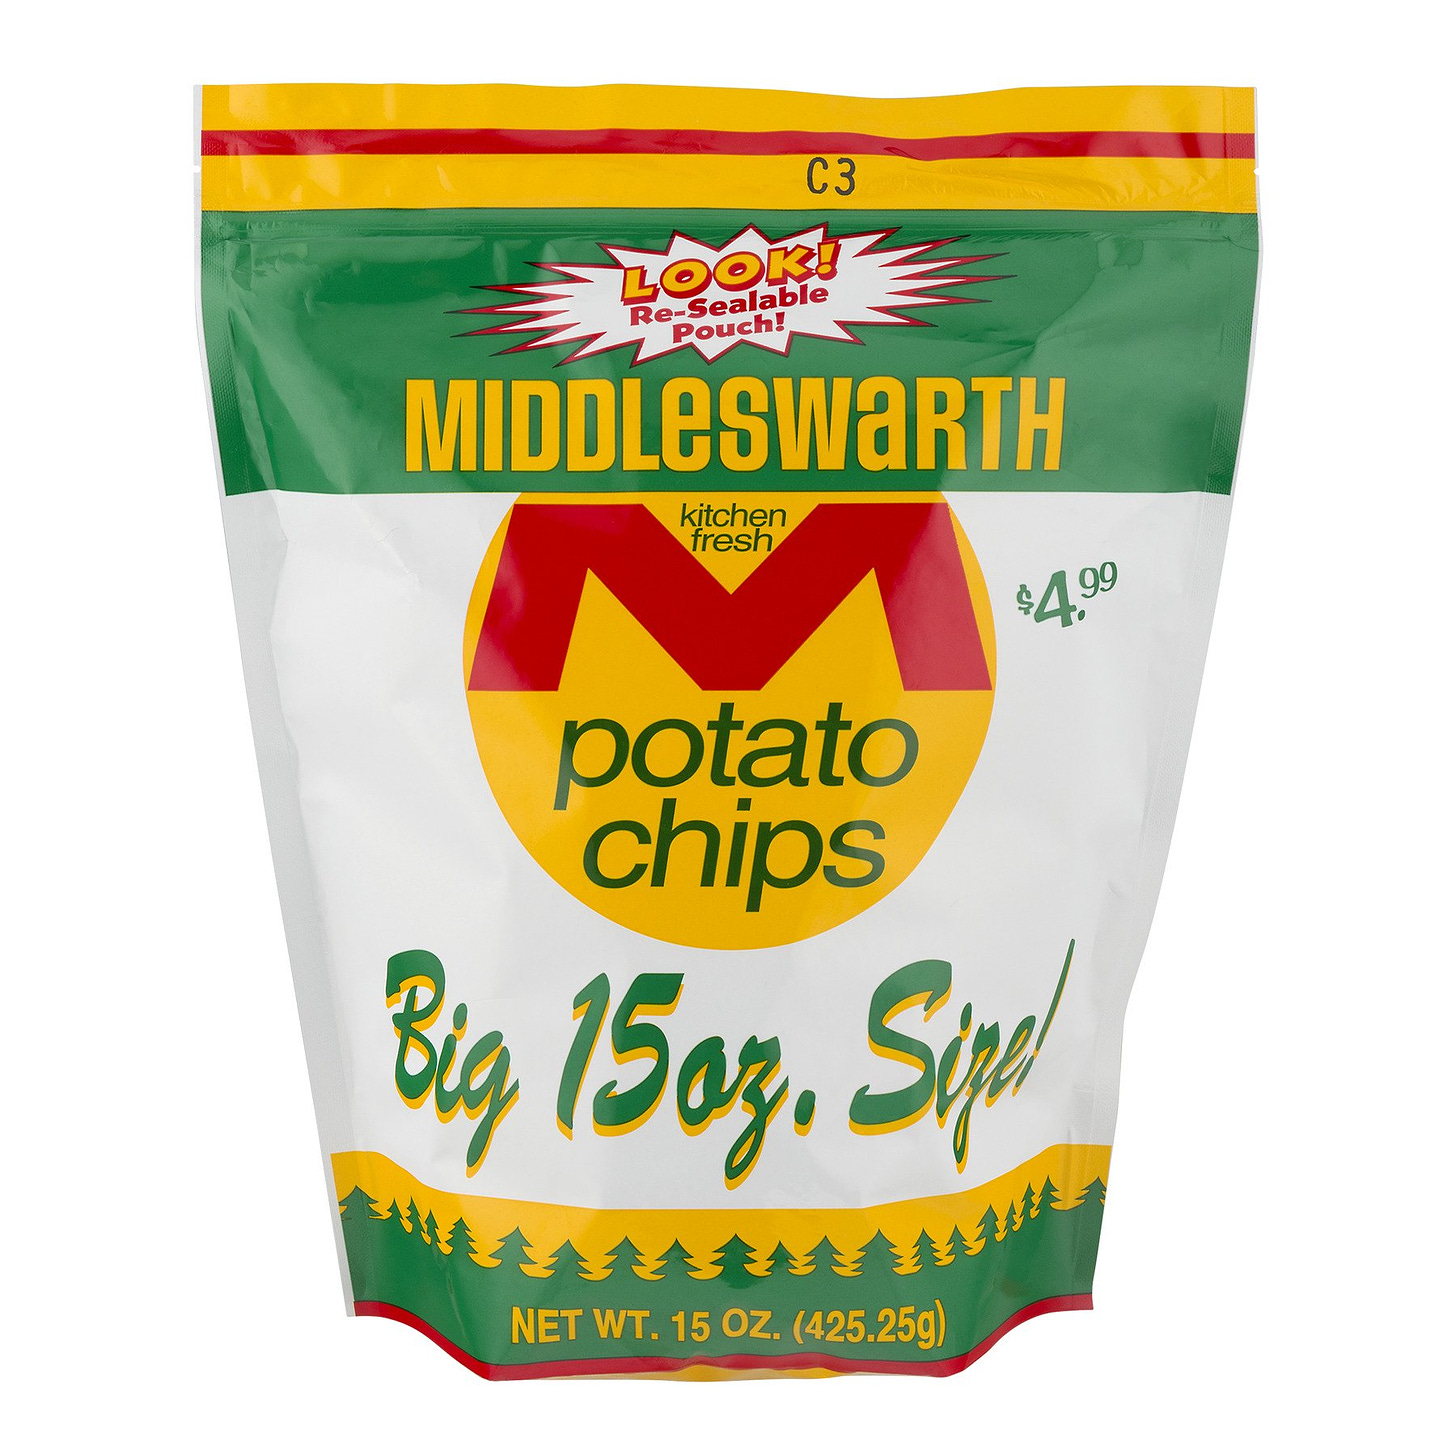 Middleswarth Potato Chips Big Size, 15 Oz.